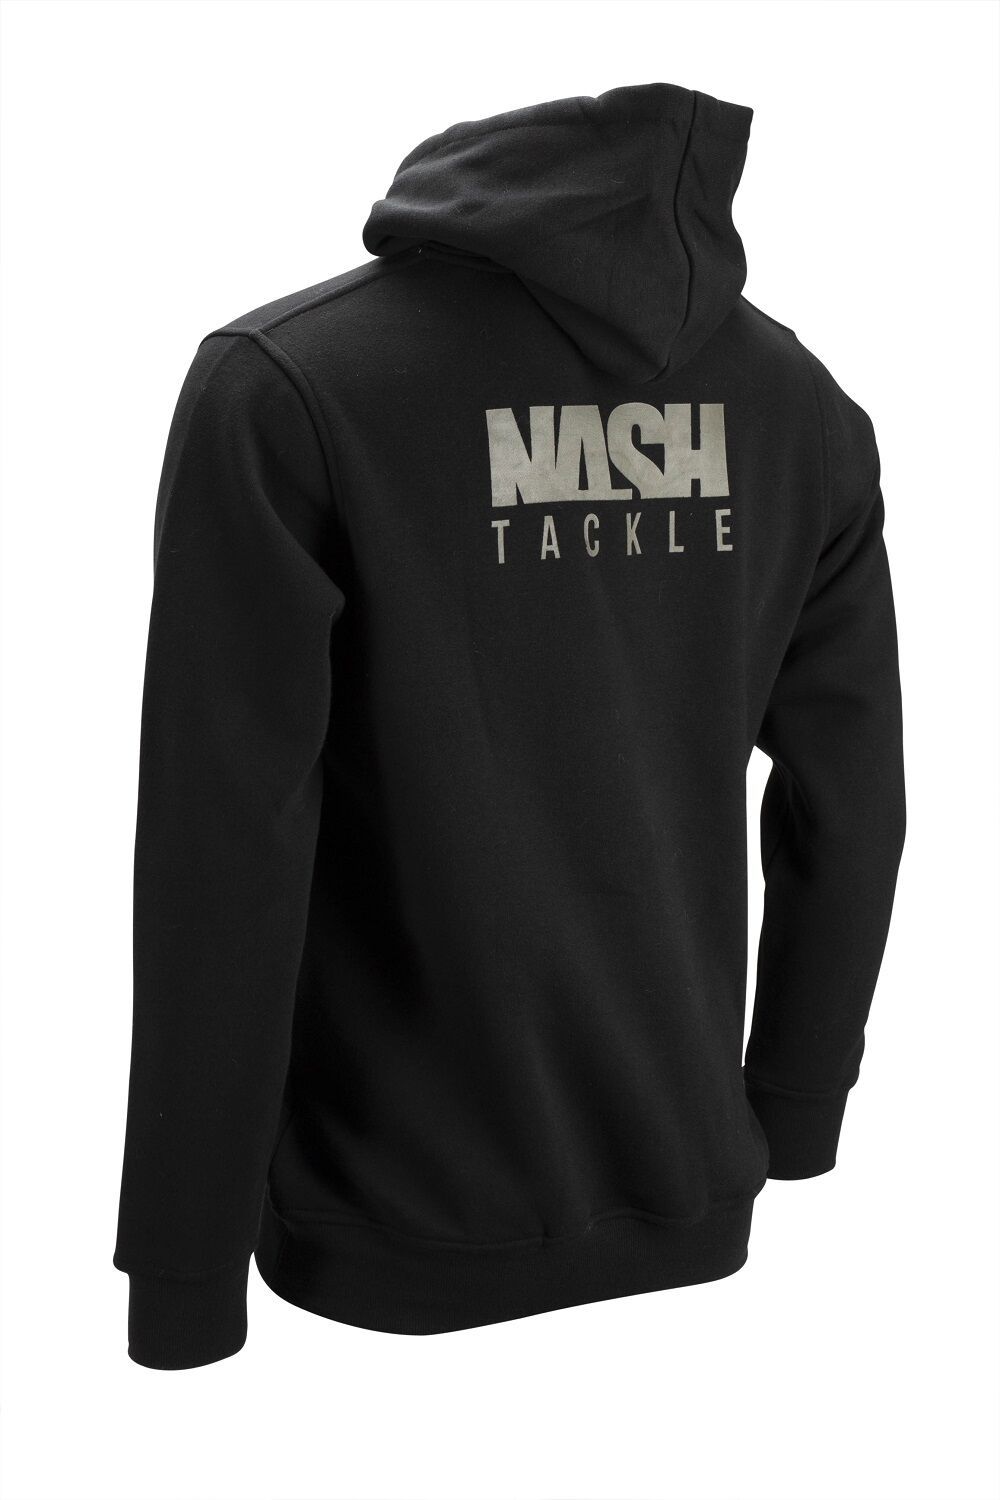 Nash Tackle Half Zip Jumper All Sizes New Carp Fishing Clothing Jumper 